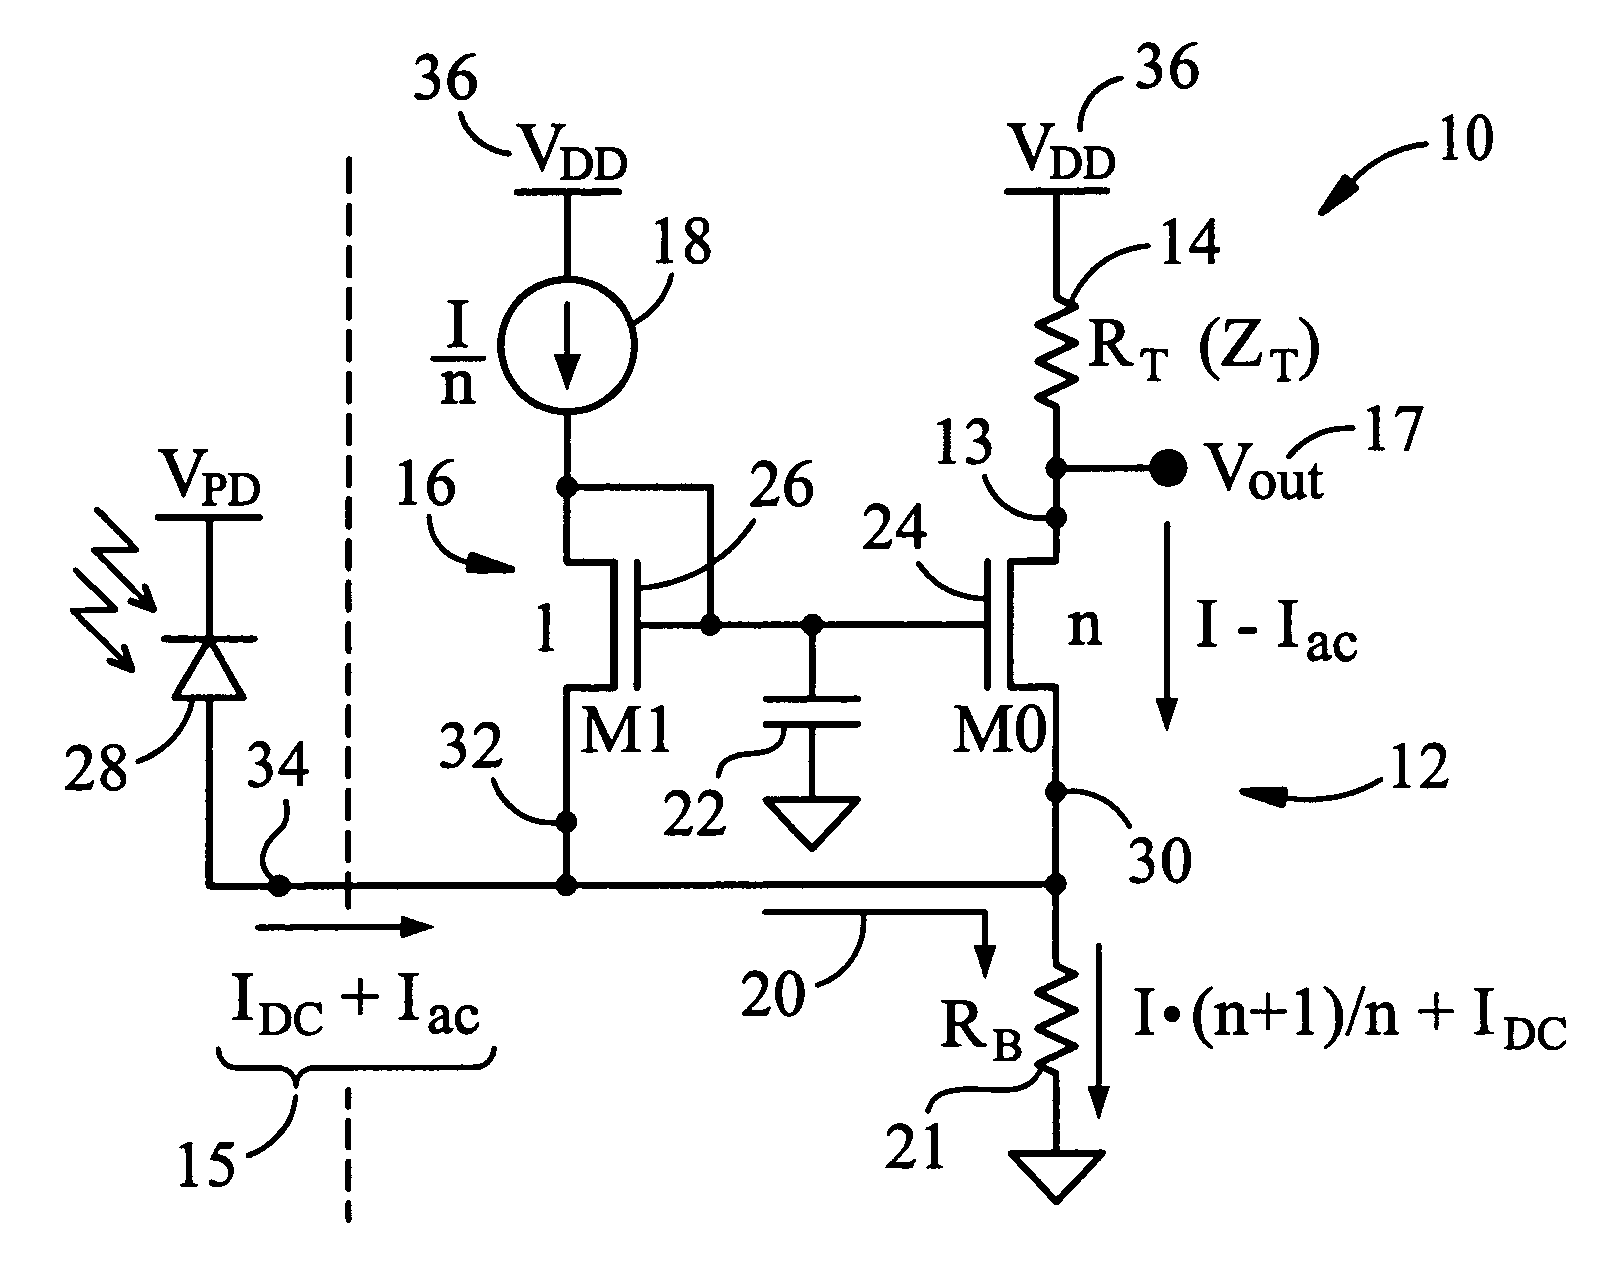 Low-voltage, low-power transimpedance amplifier architecture